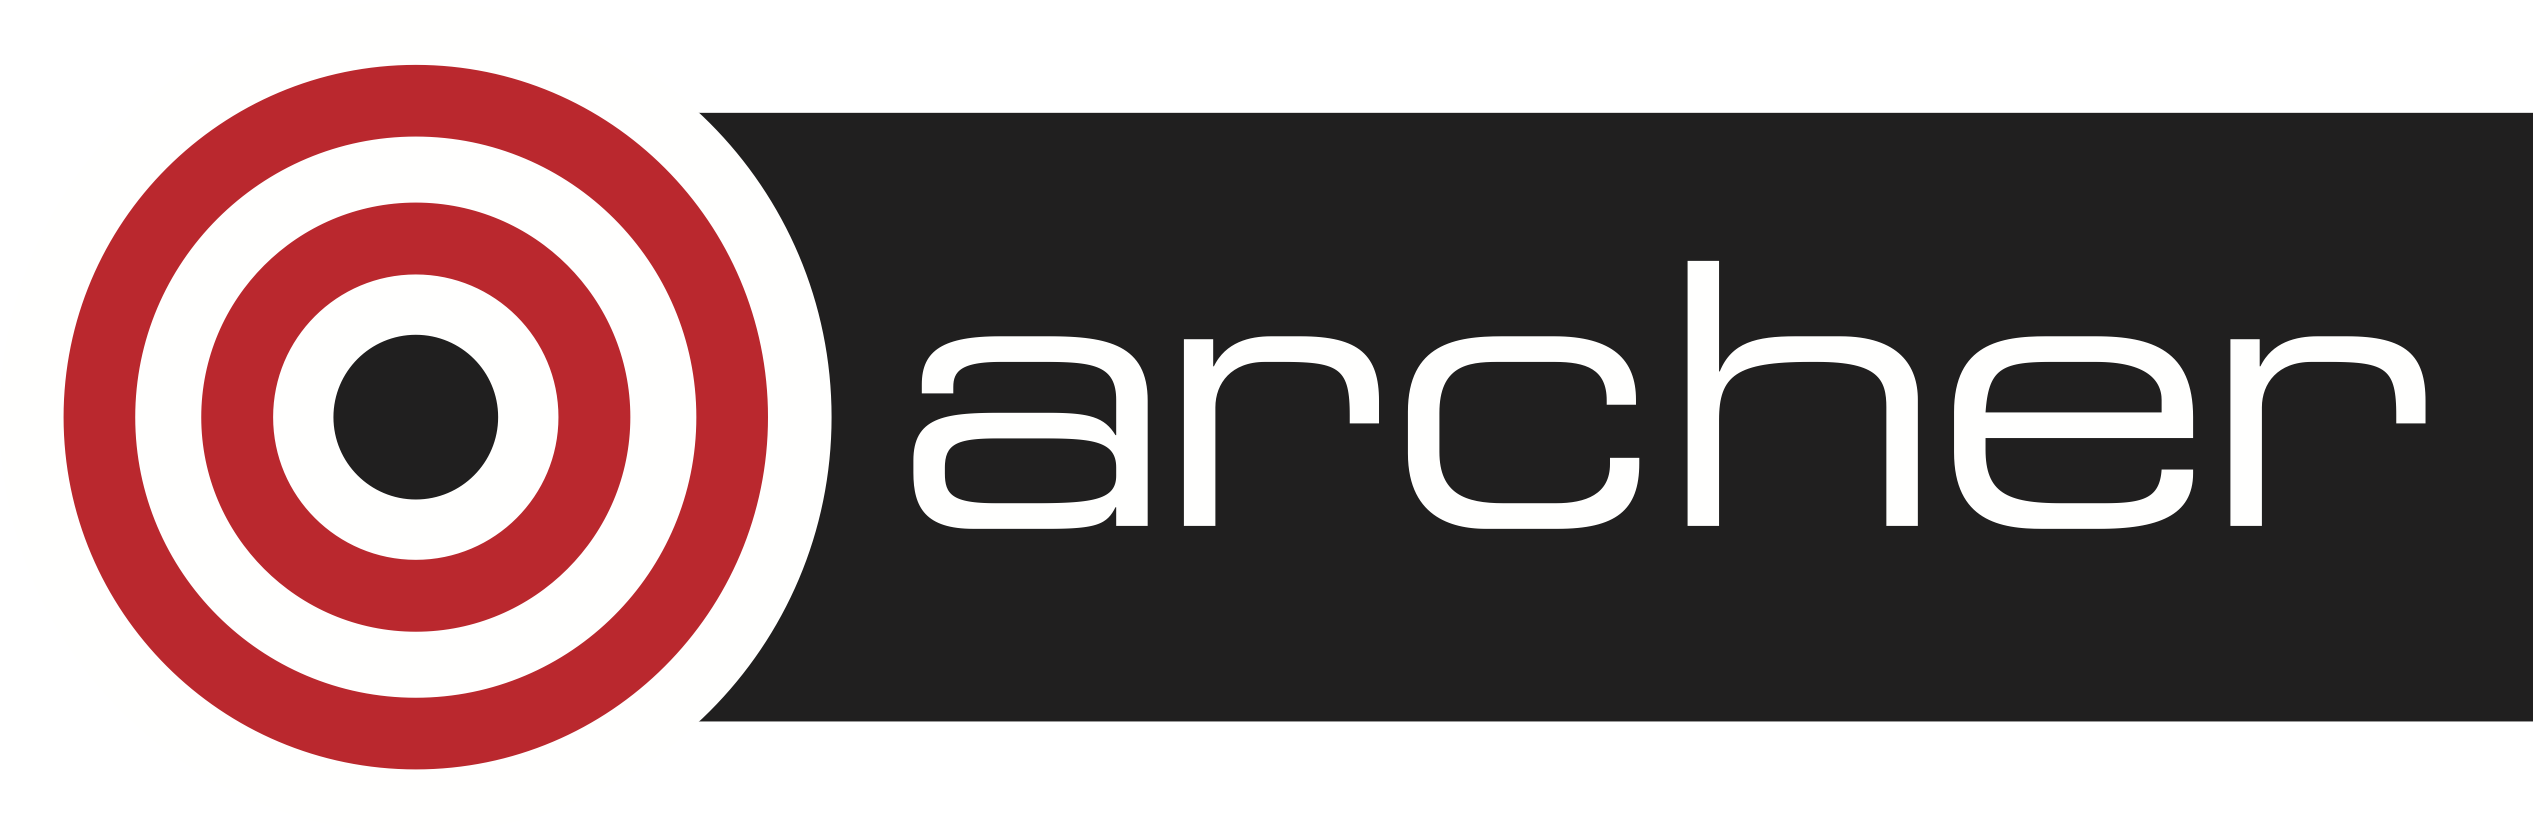 ARCHER logo